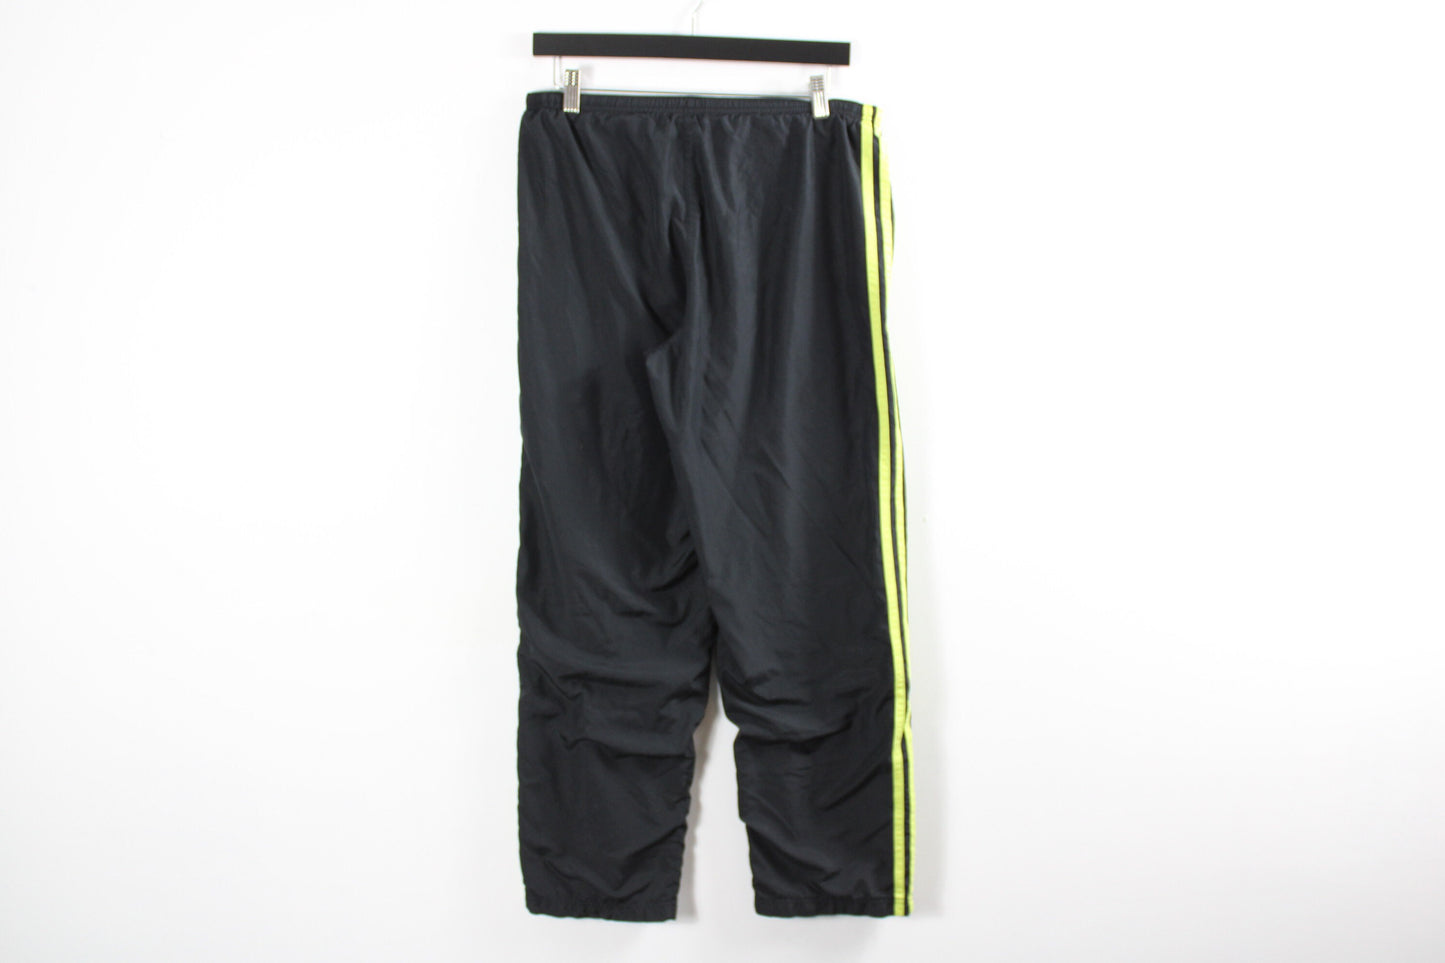 Adidas Track Pants / Windbreaker Tearaways Style Joggers / 90s Streetwear / Vintage Hip Hop Clothing